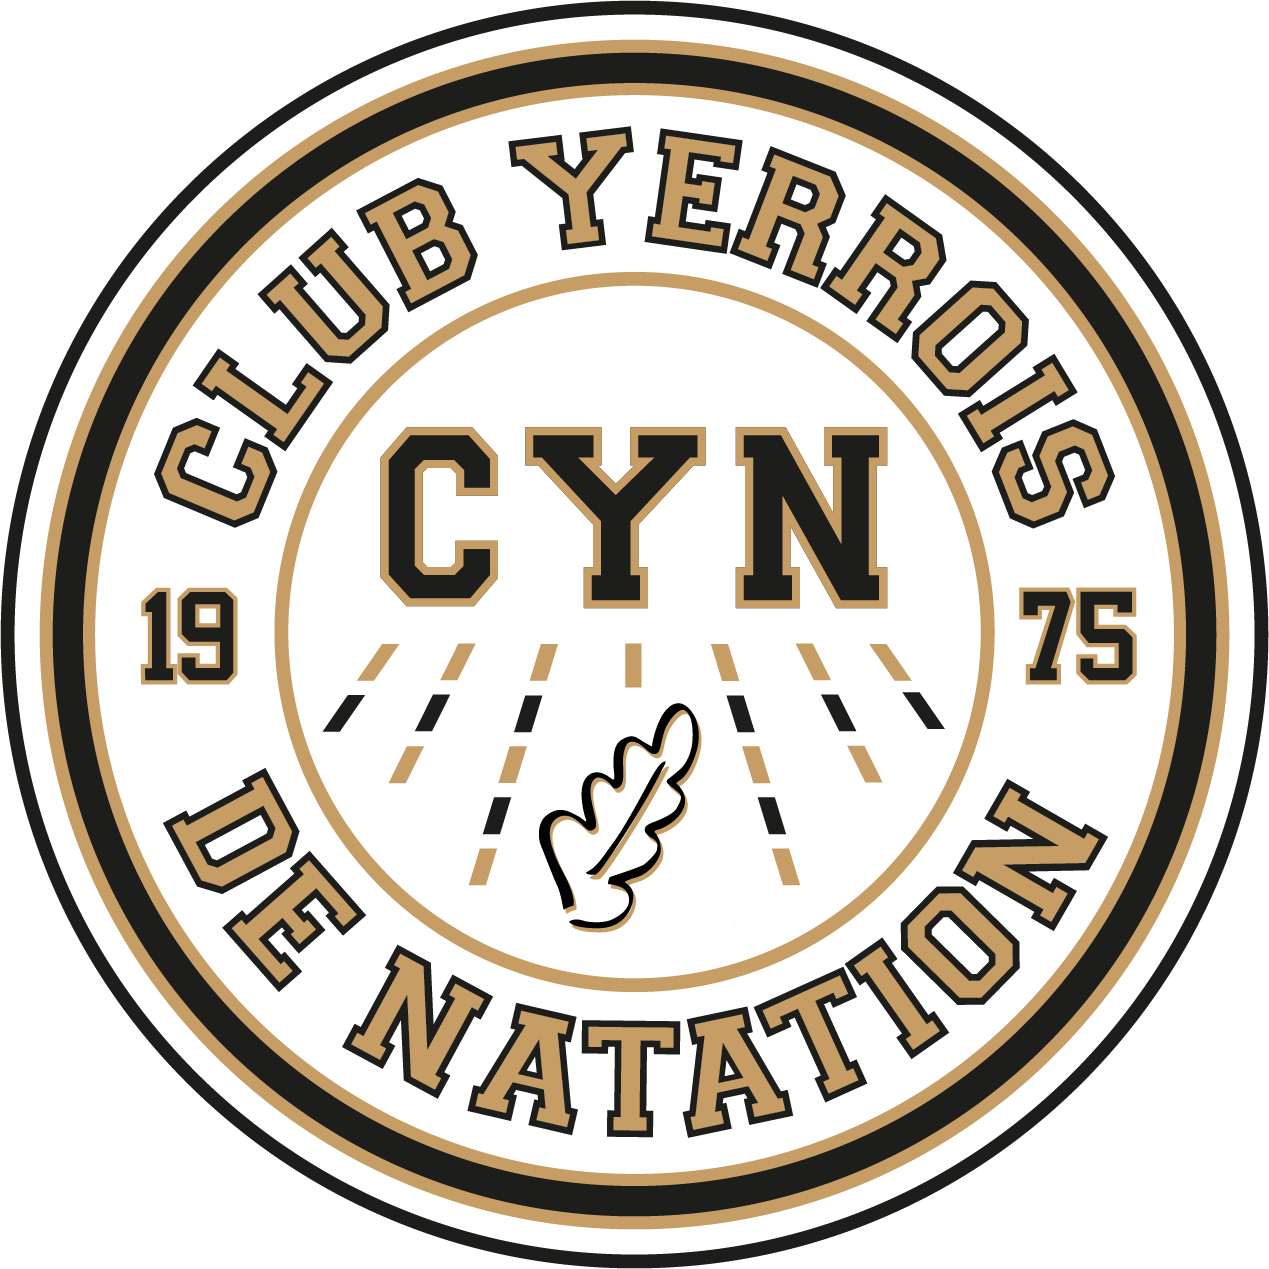 Club Yerrois de Natation